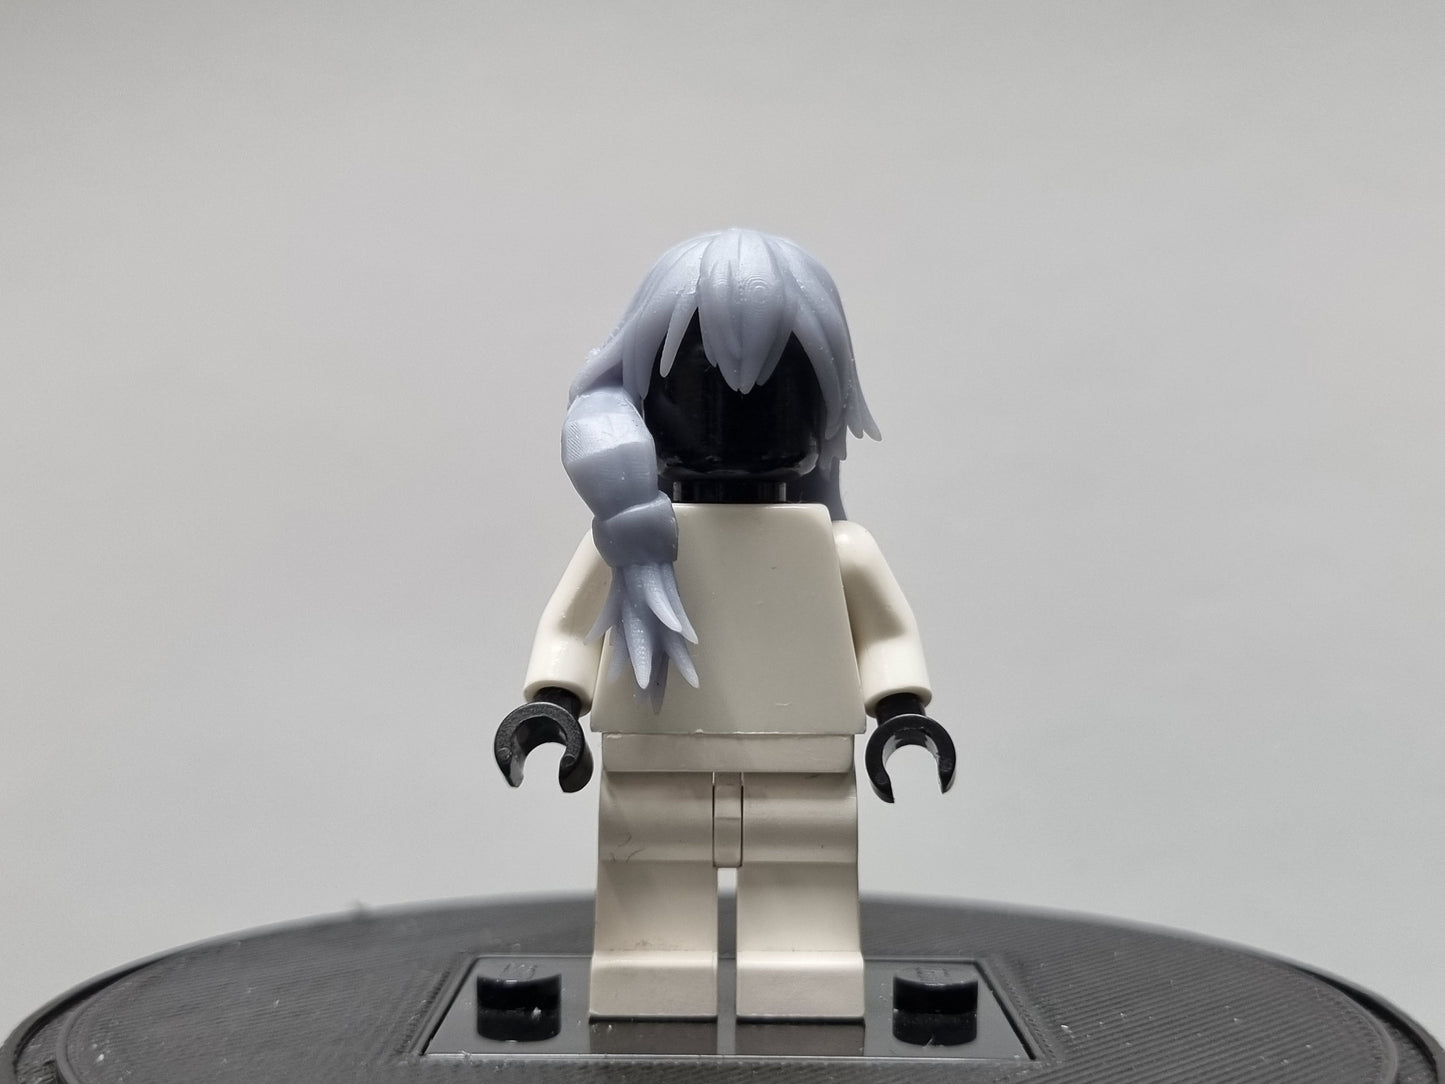 Building toy 3D printed ninja sorucerer villian with long hair